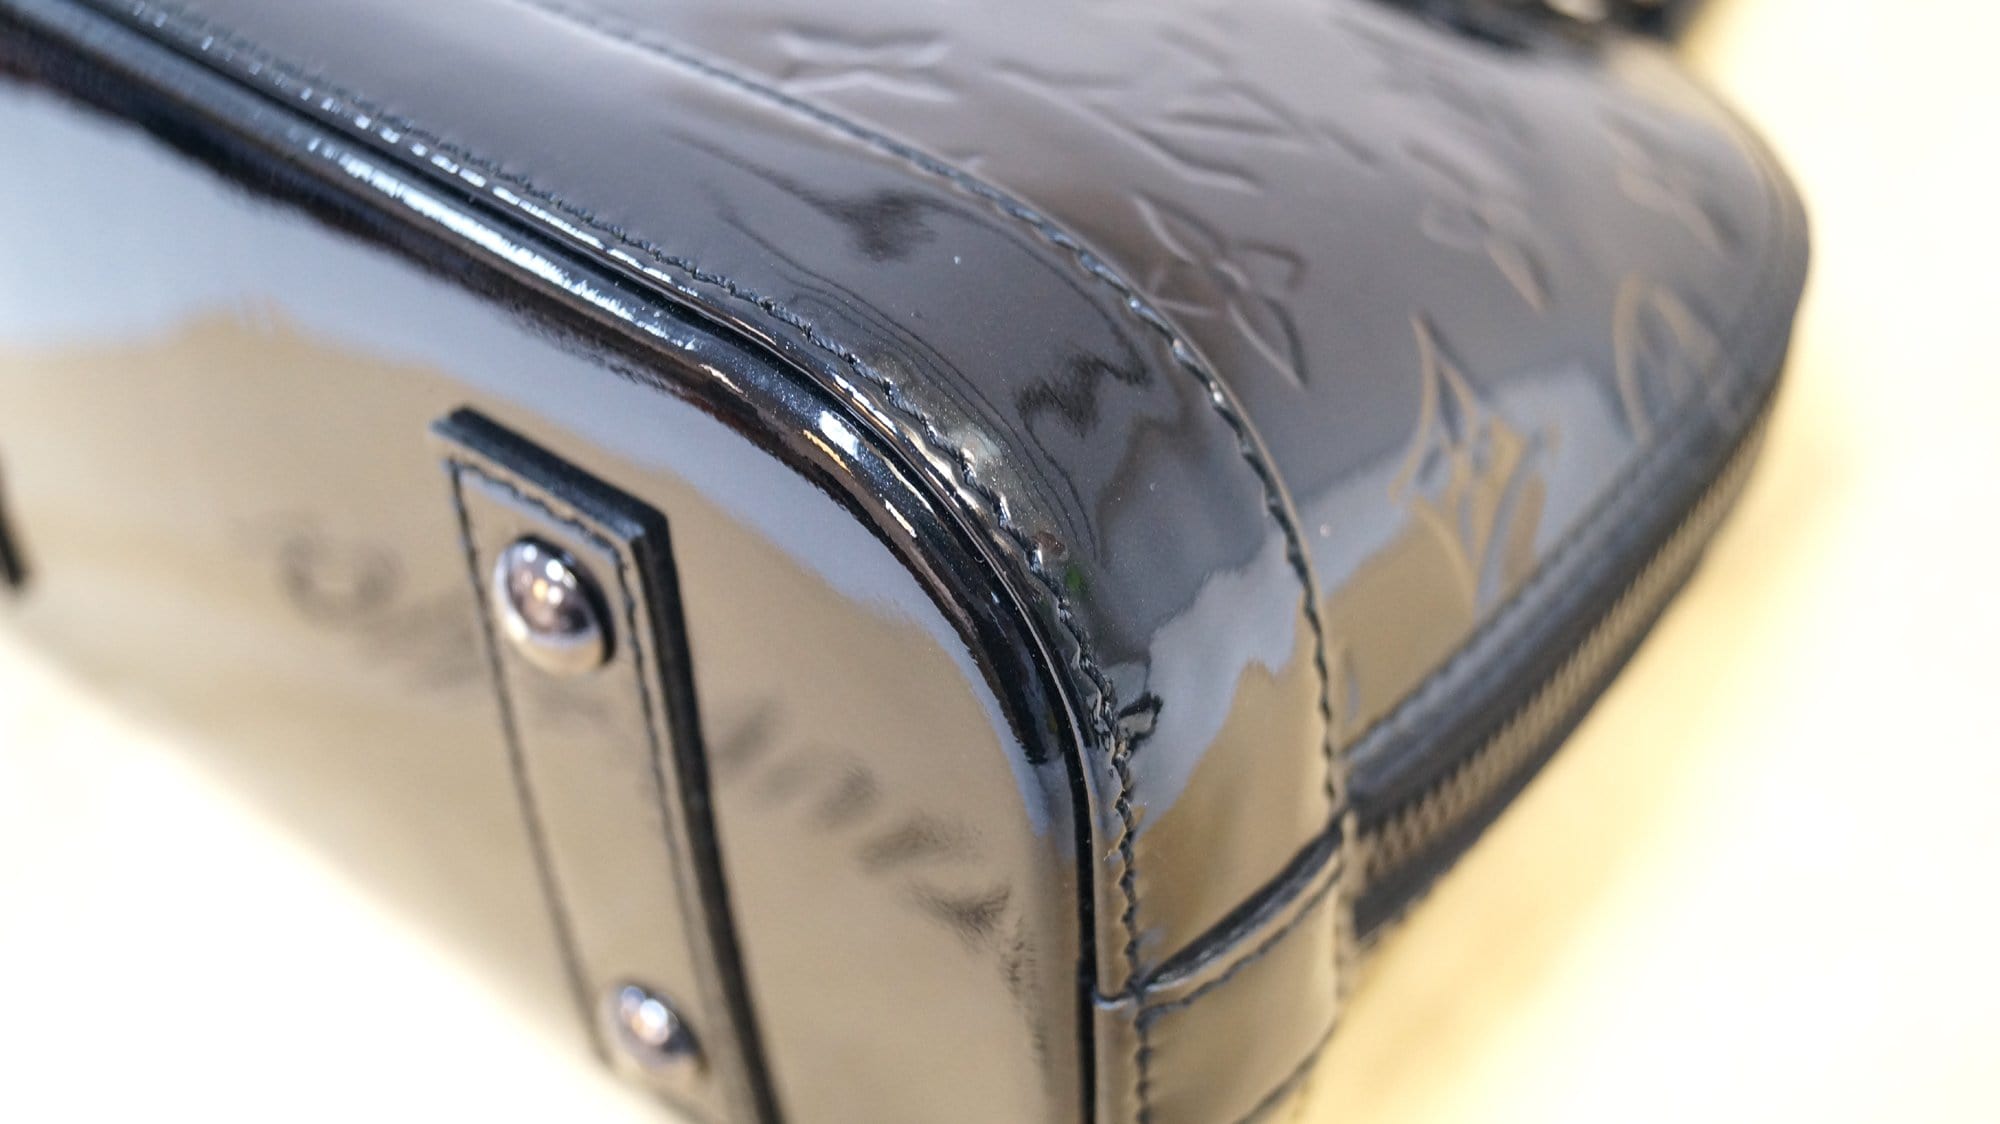 Alma bb leather handbag Louis Vuitton Black in Leather - 26751016